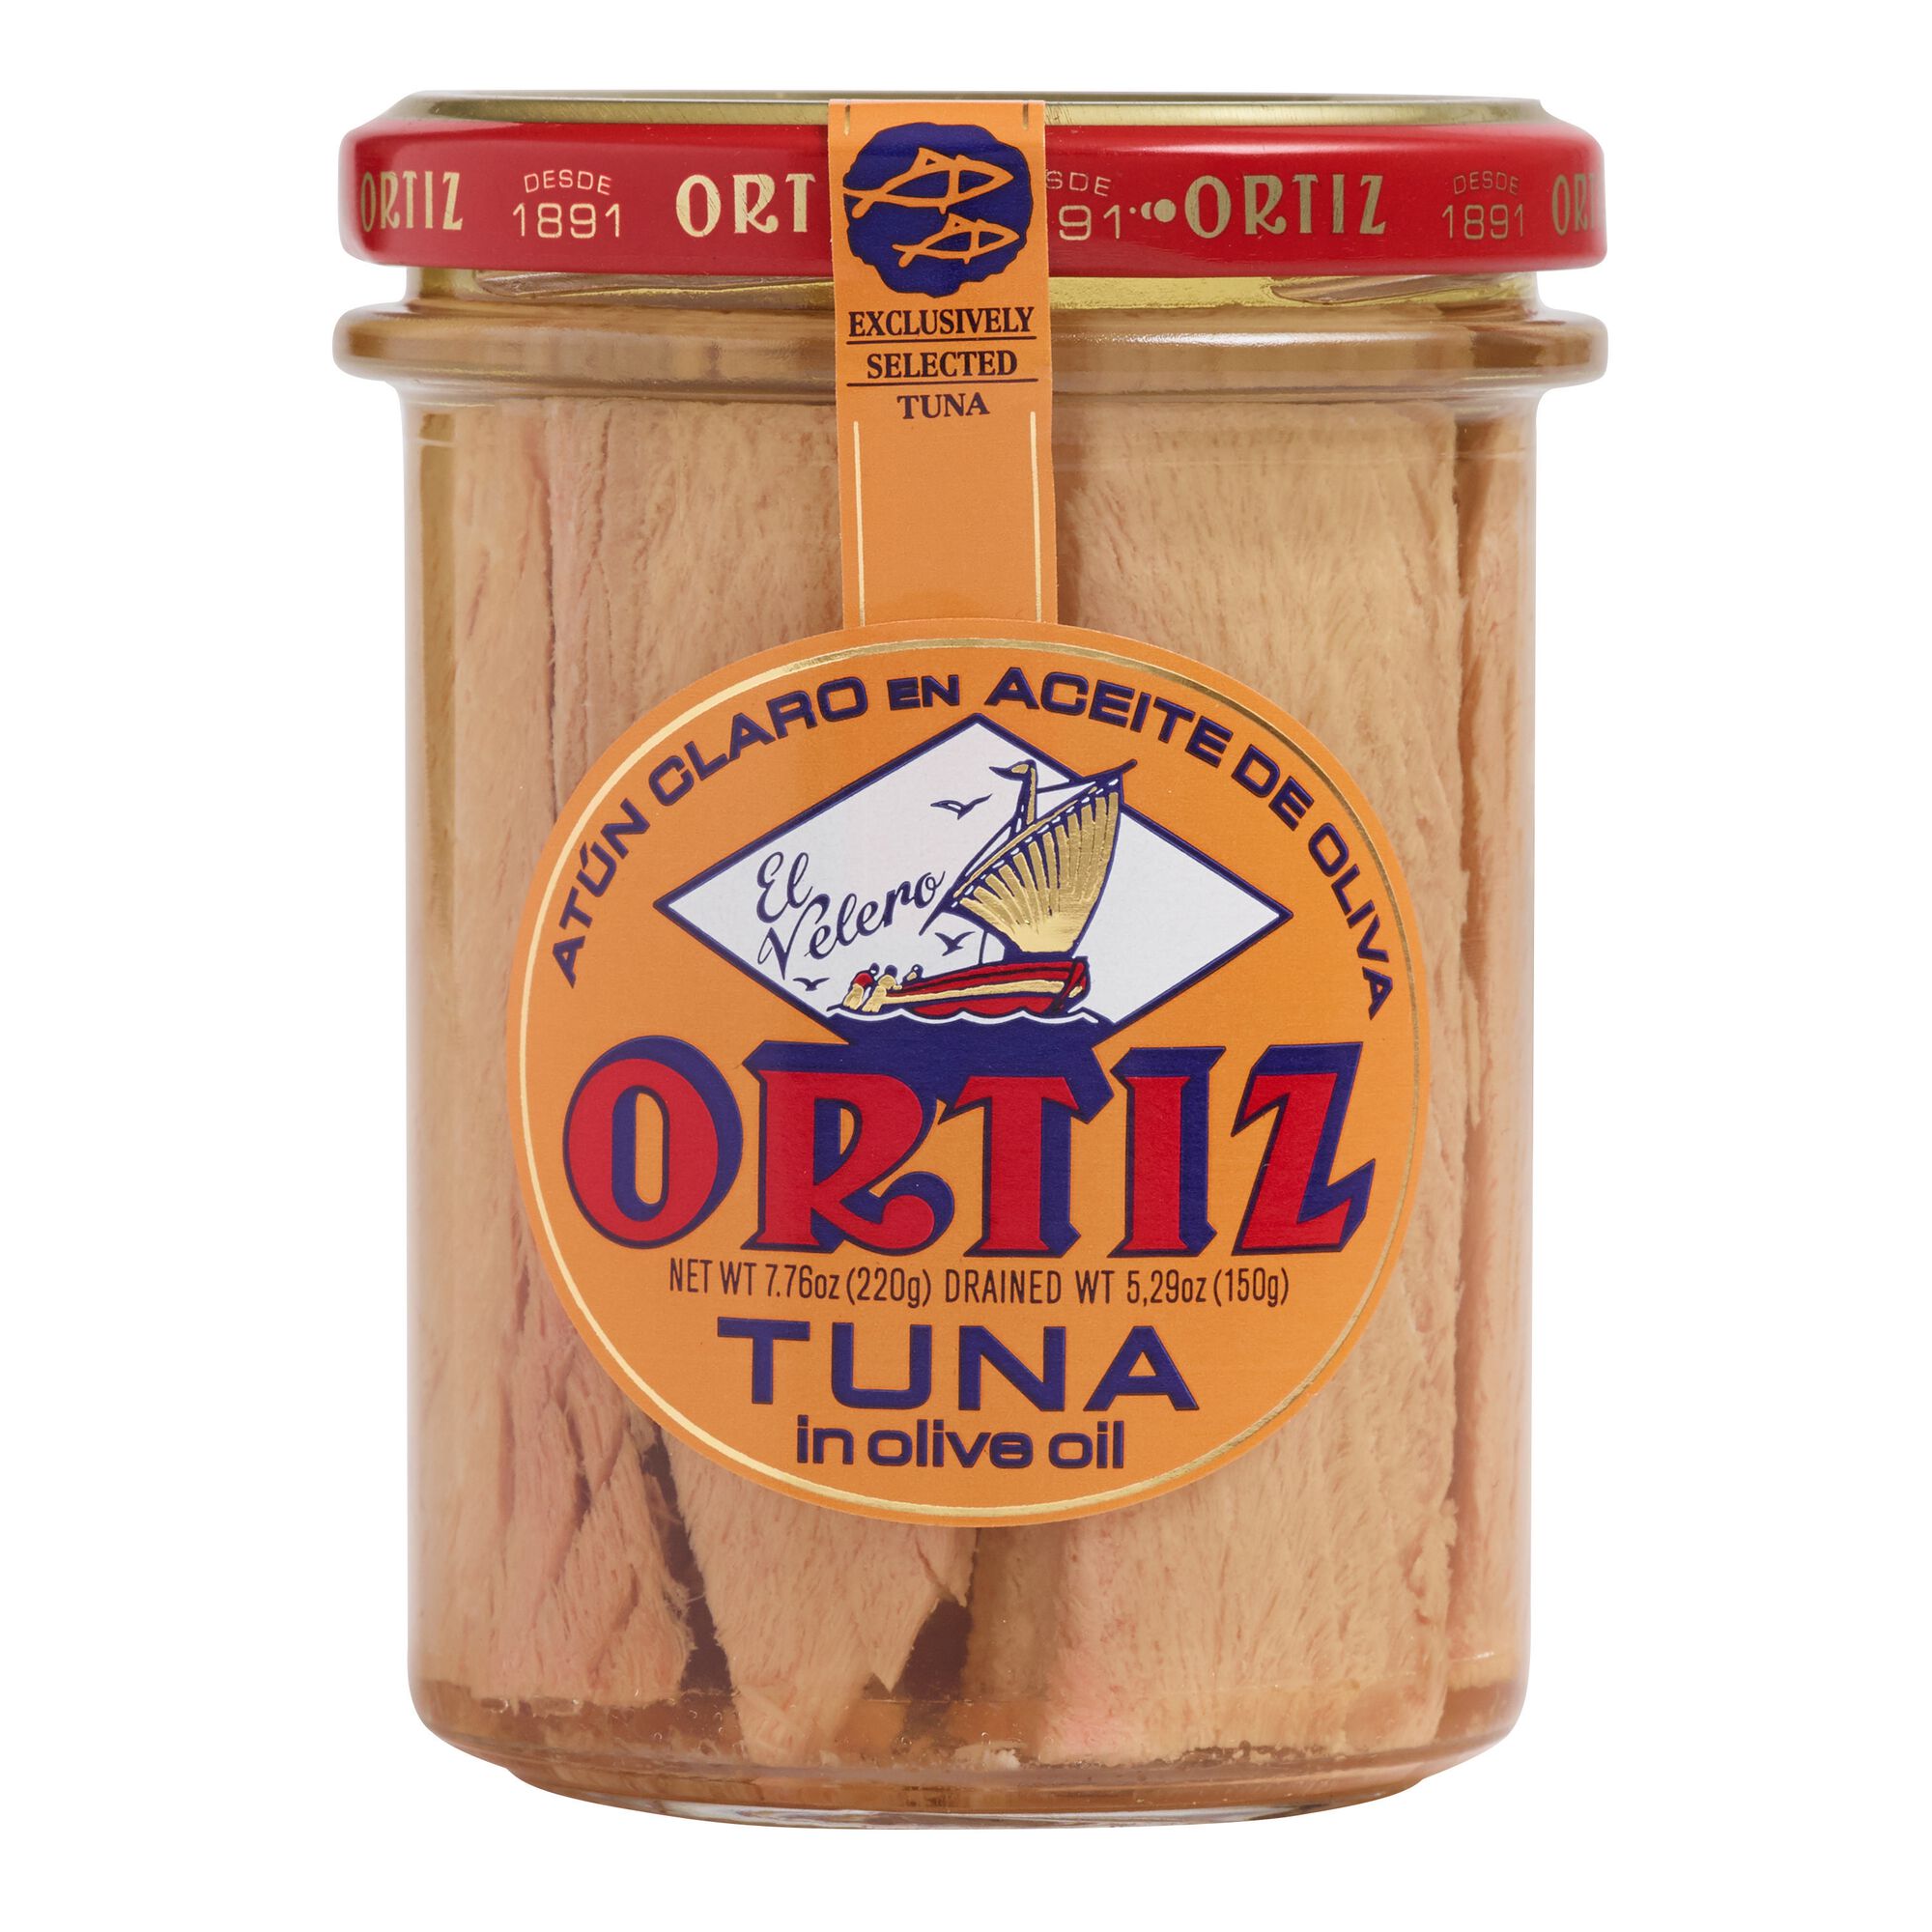 Ortiz Kosher yellow fin tuna in olive oil 220g 12ct